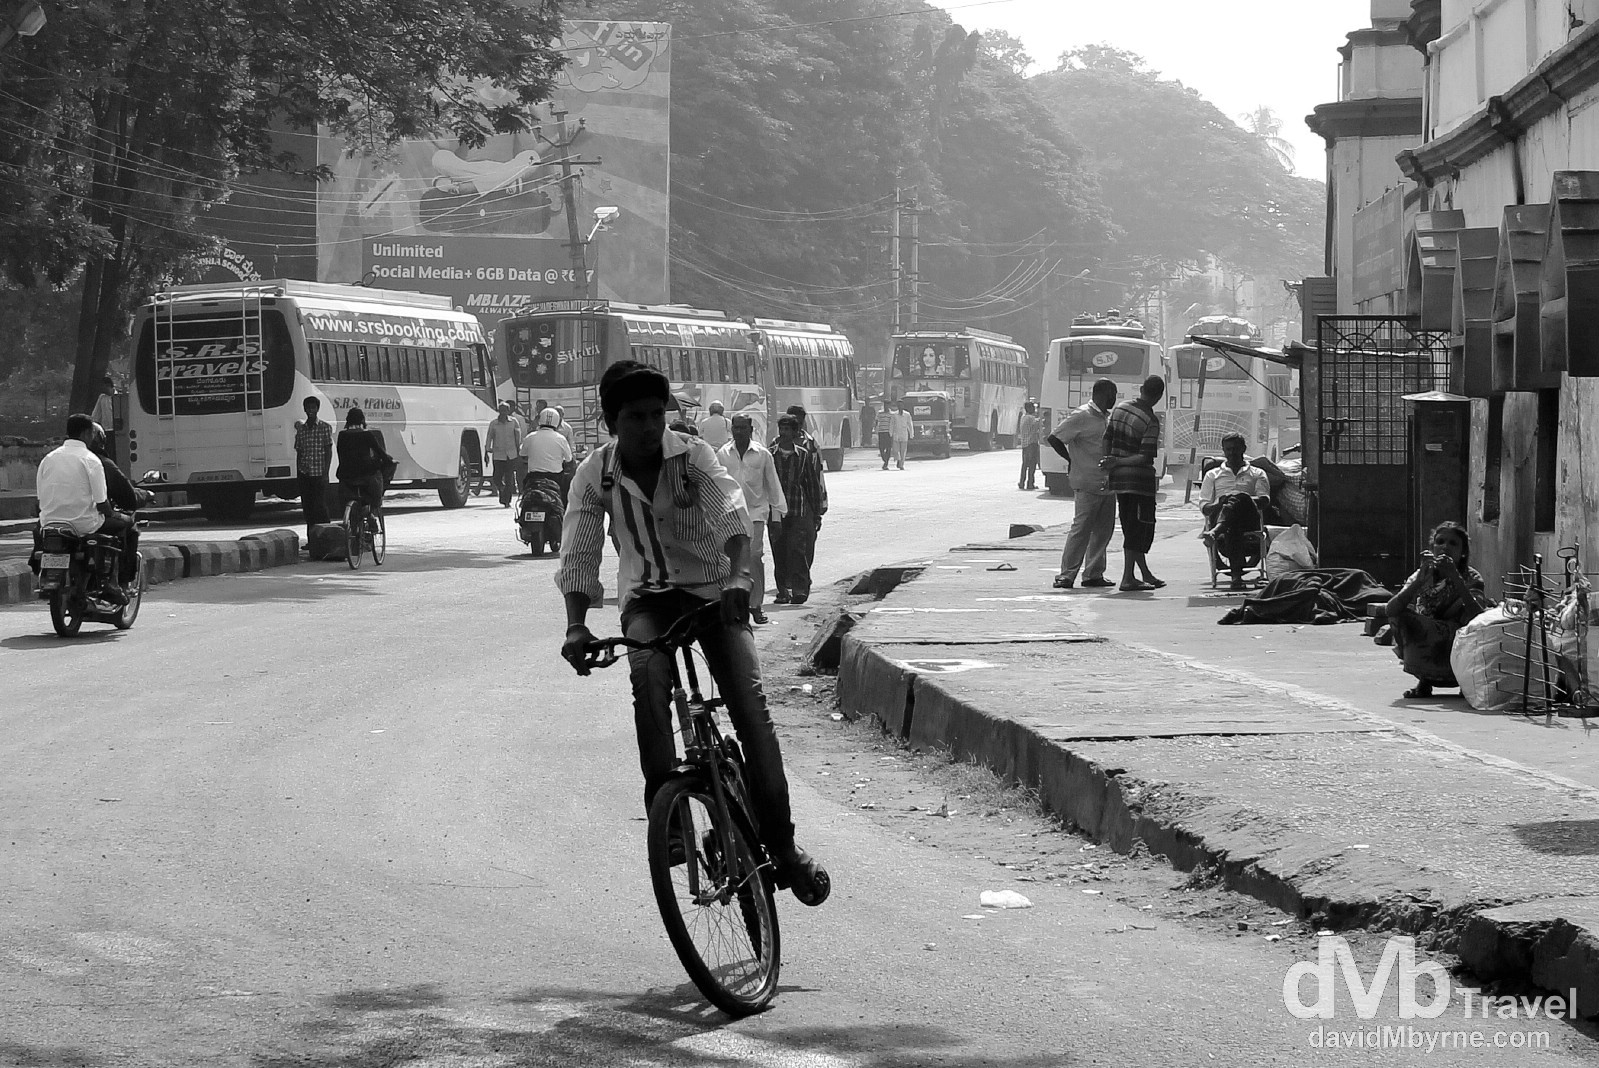 On the streets of Mysore, Karnataka, southern India. September 21st 2012.